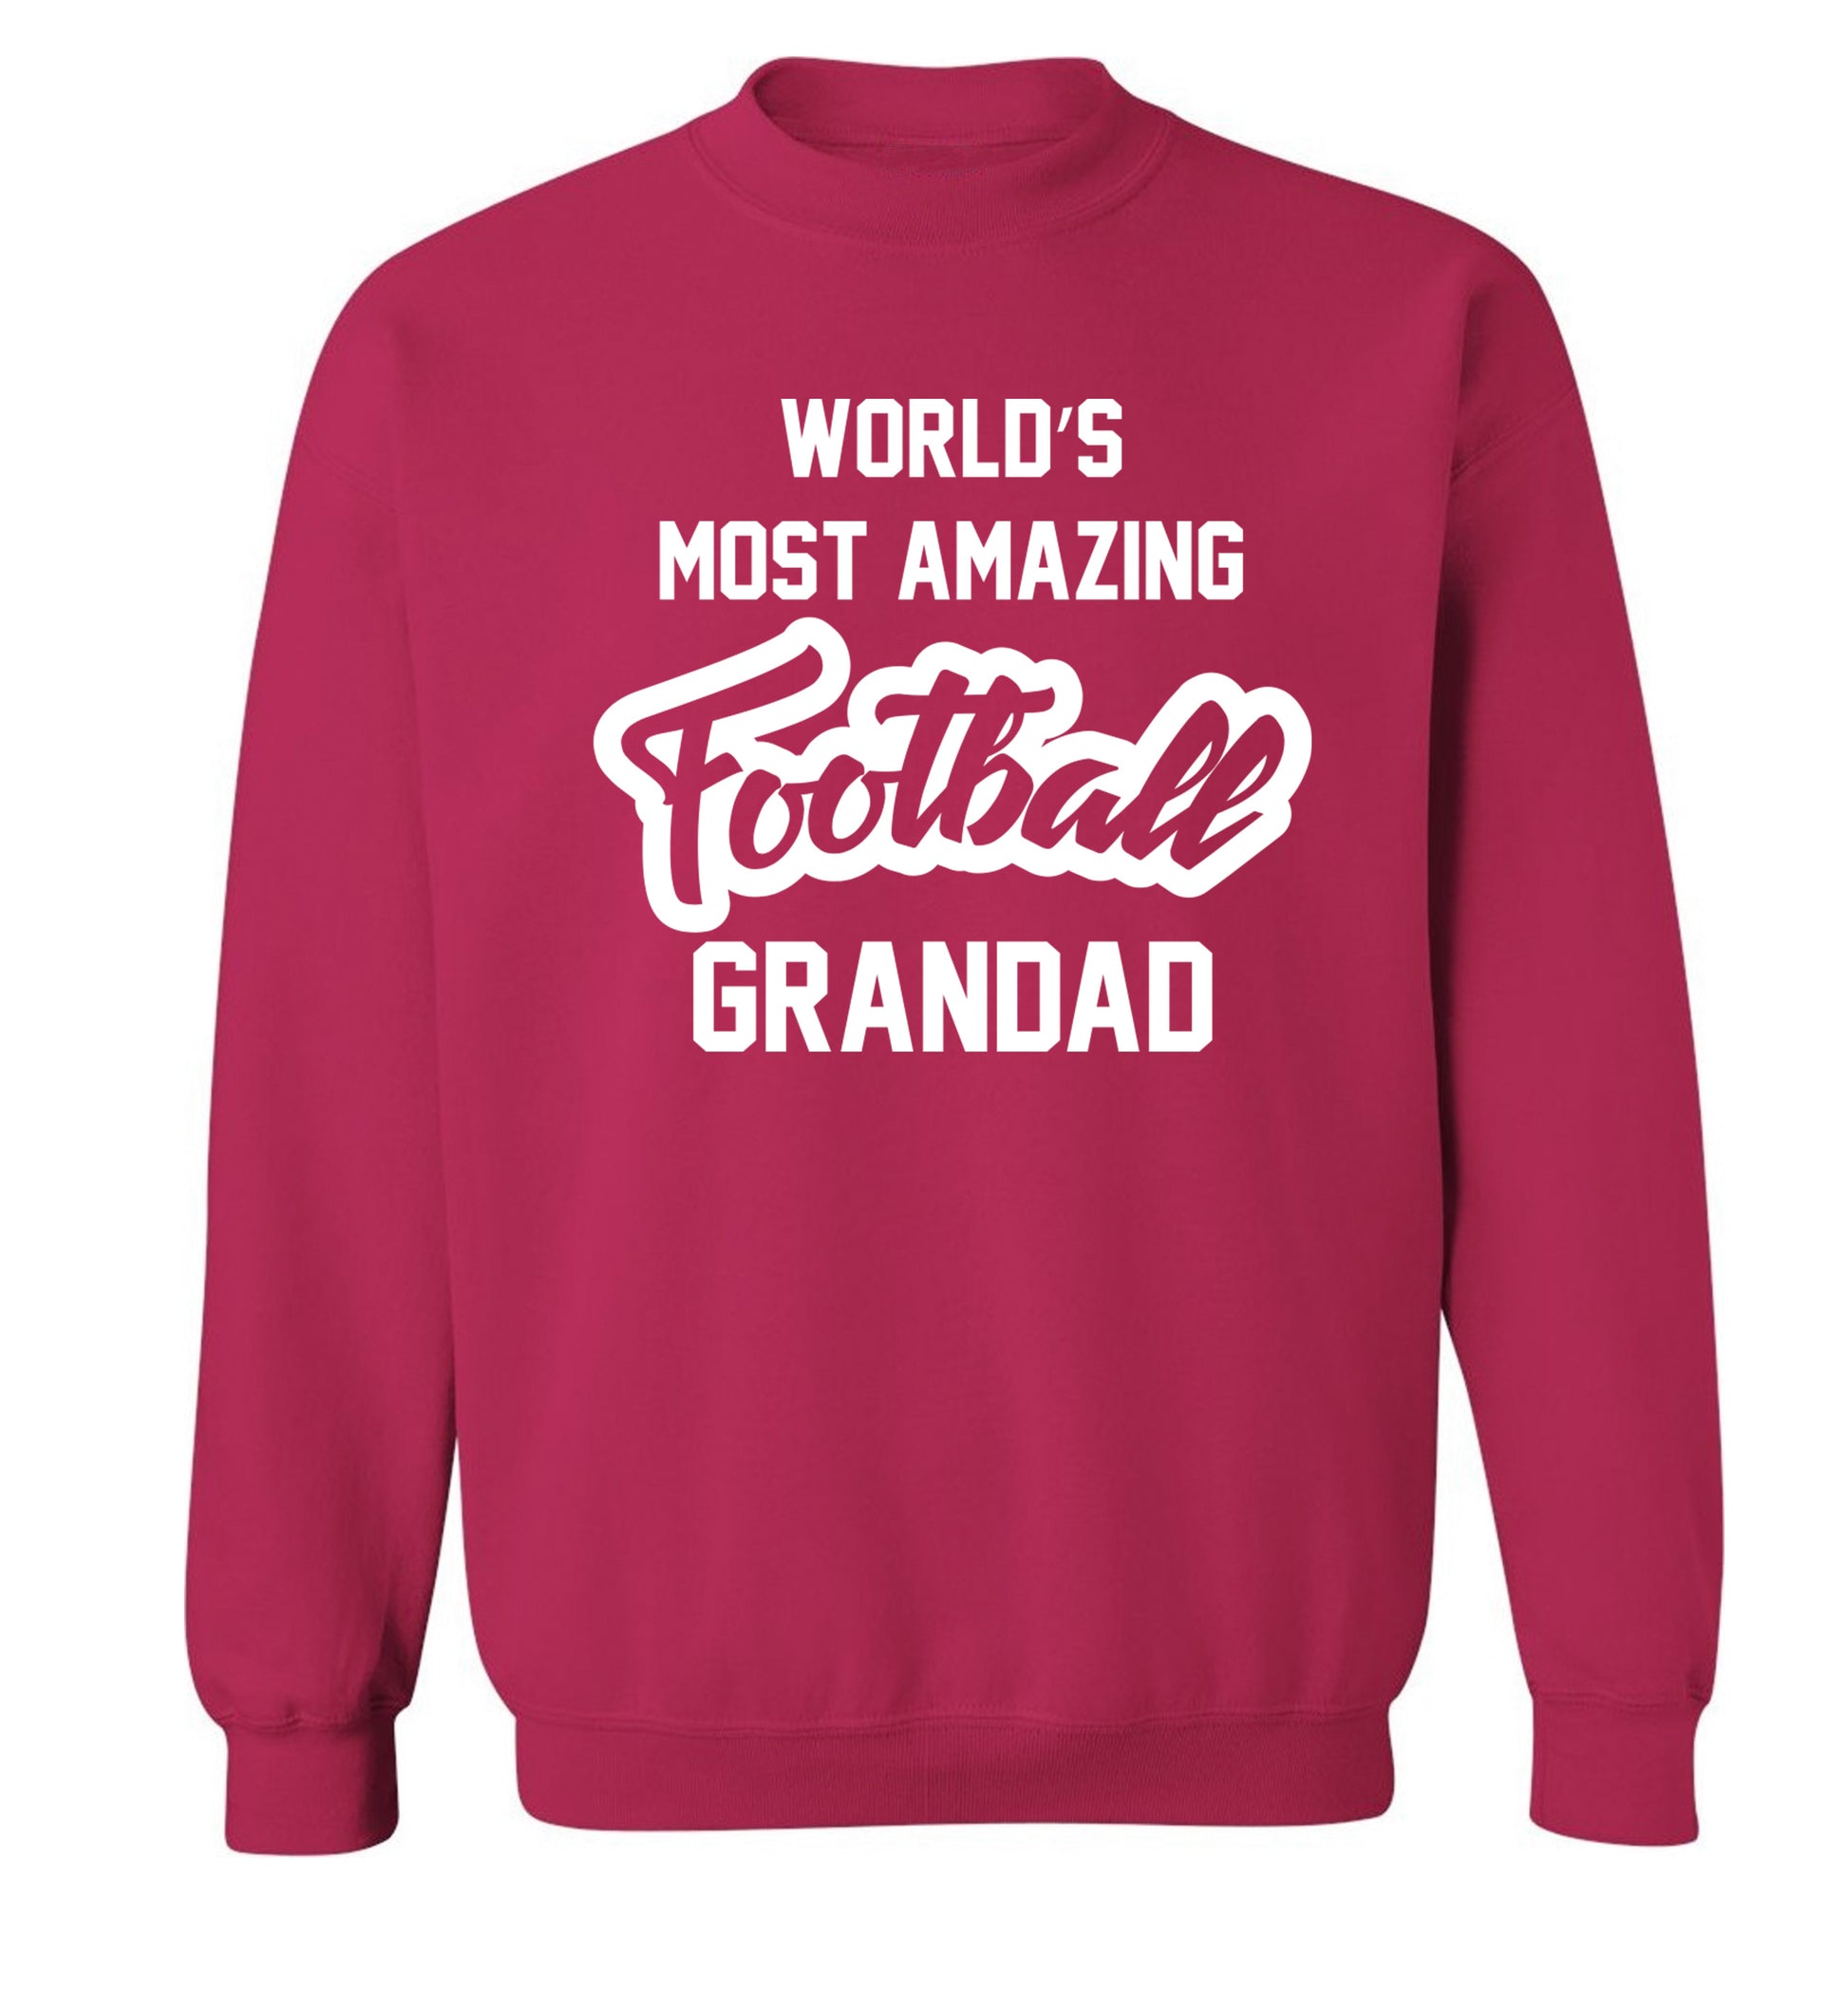 Worlds most amazing football grandad Adult's unisexpink Sweater 2XL